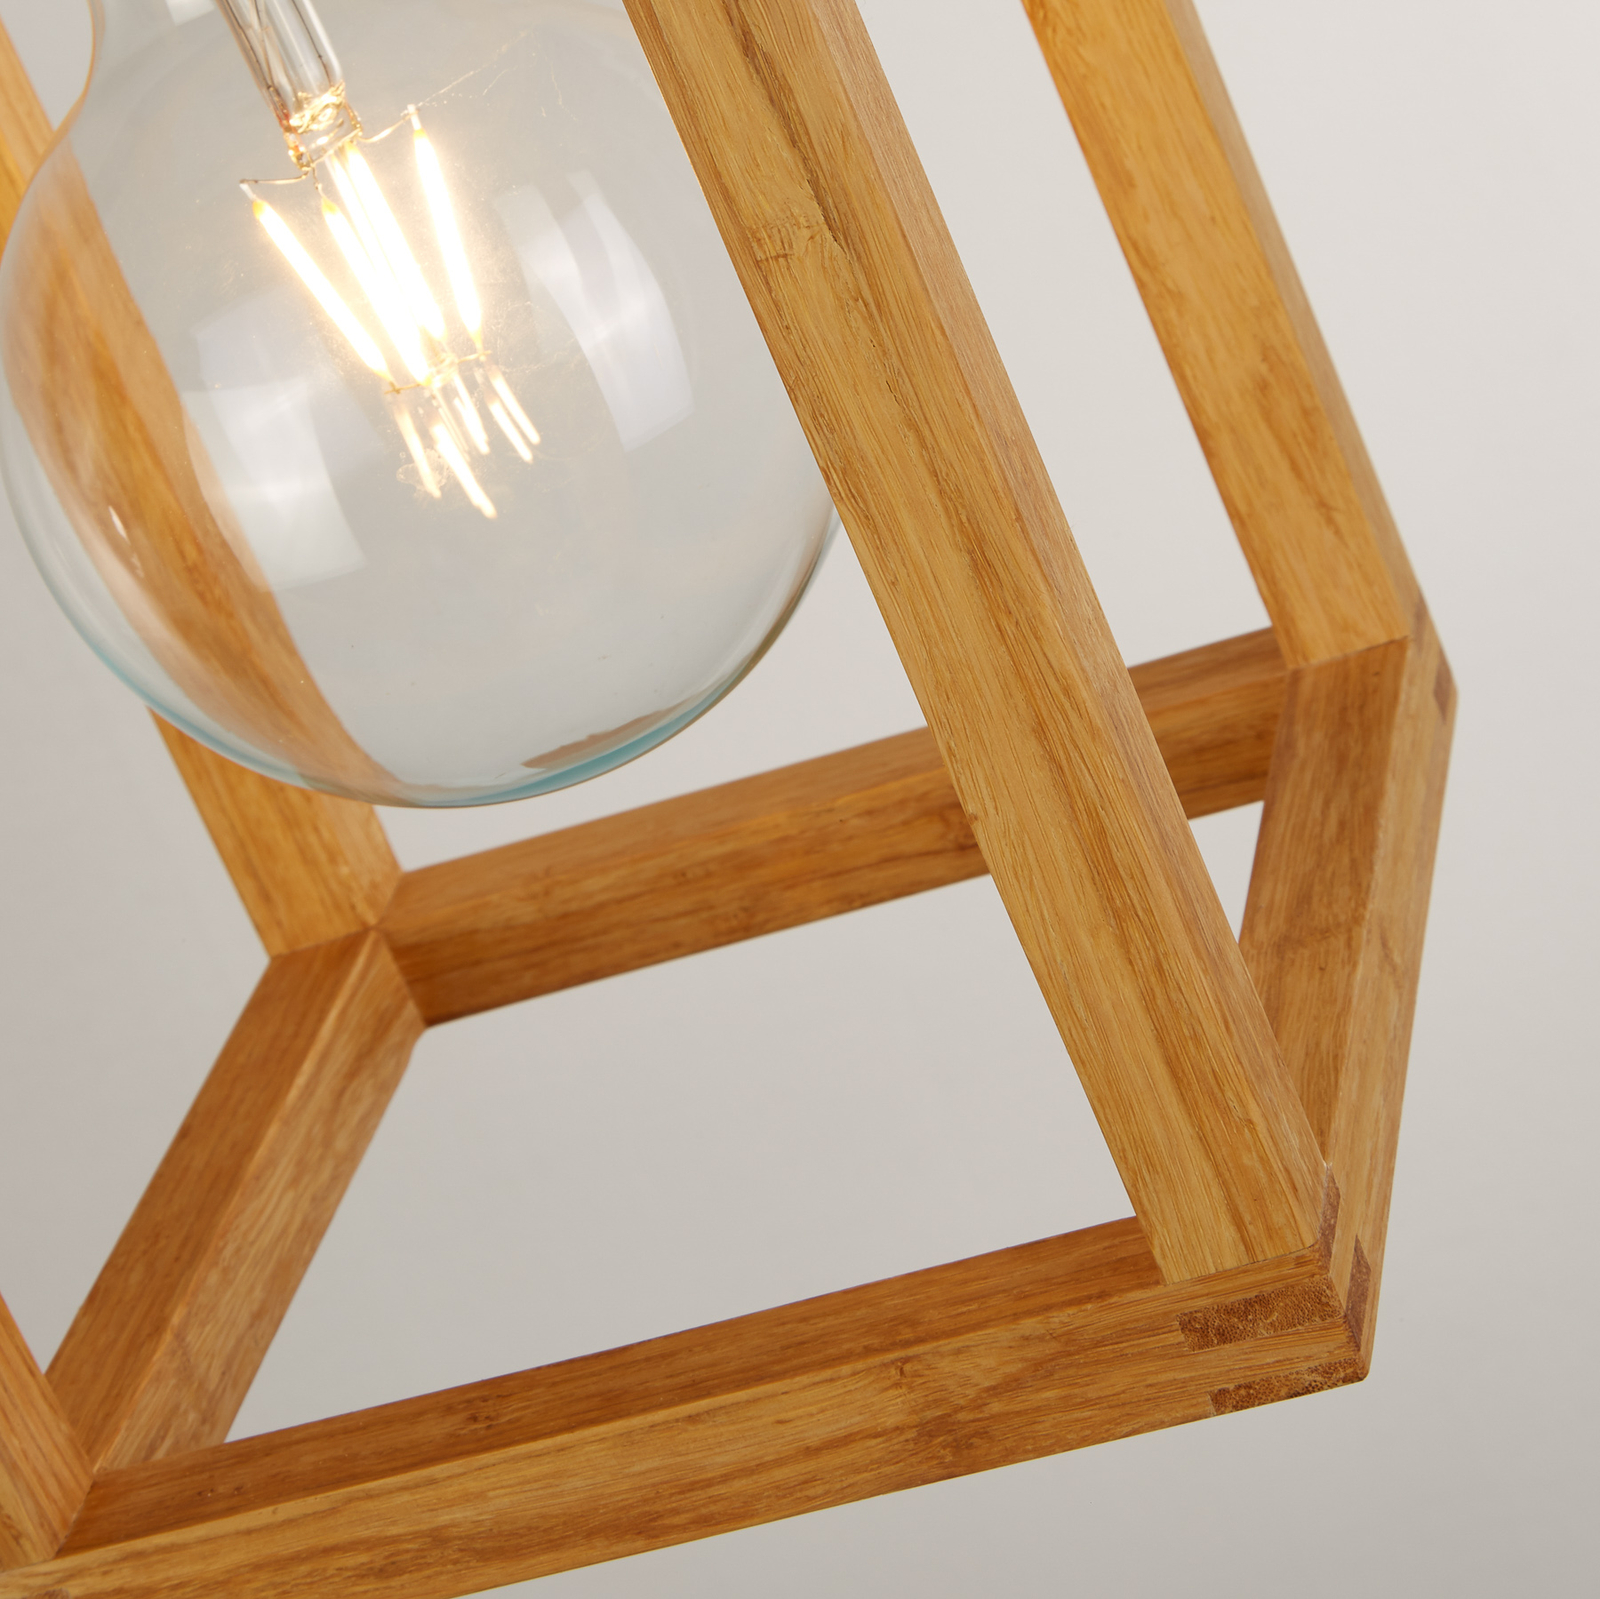 Square pendant light made of wood, 1-bulb